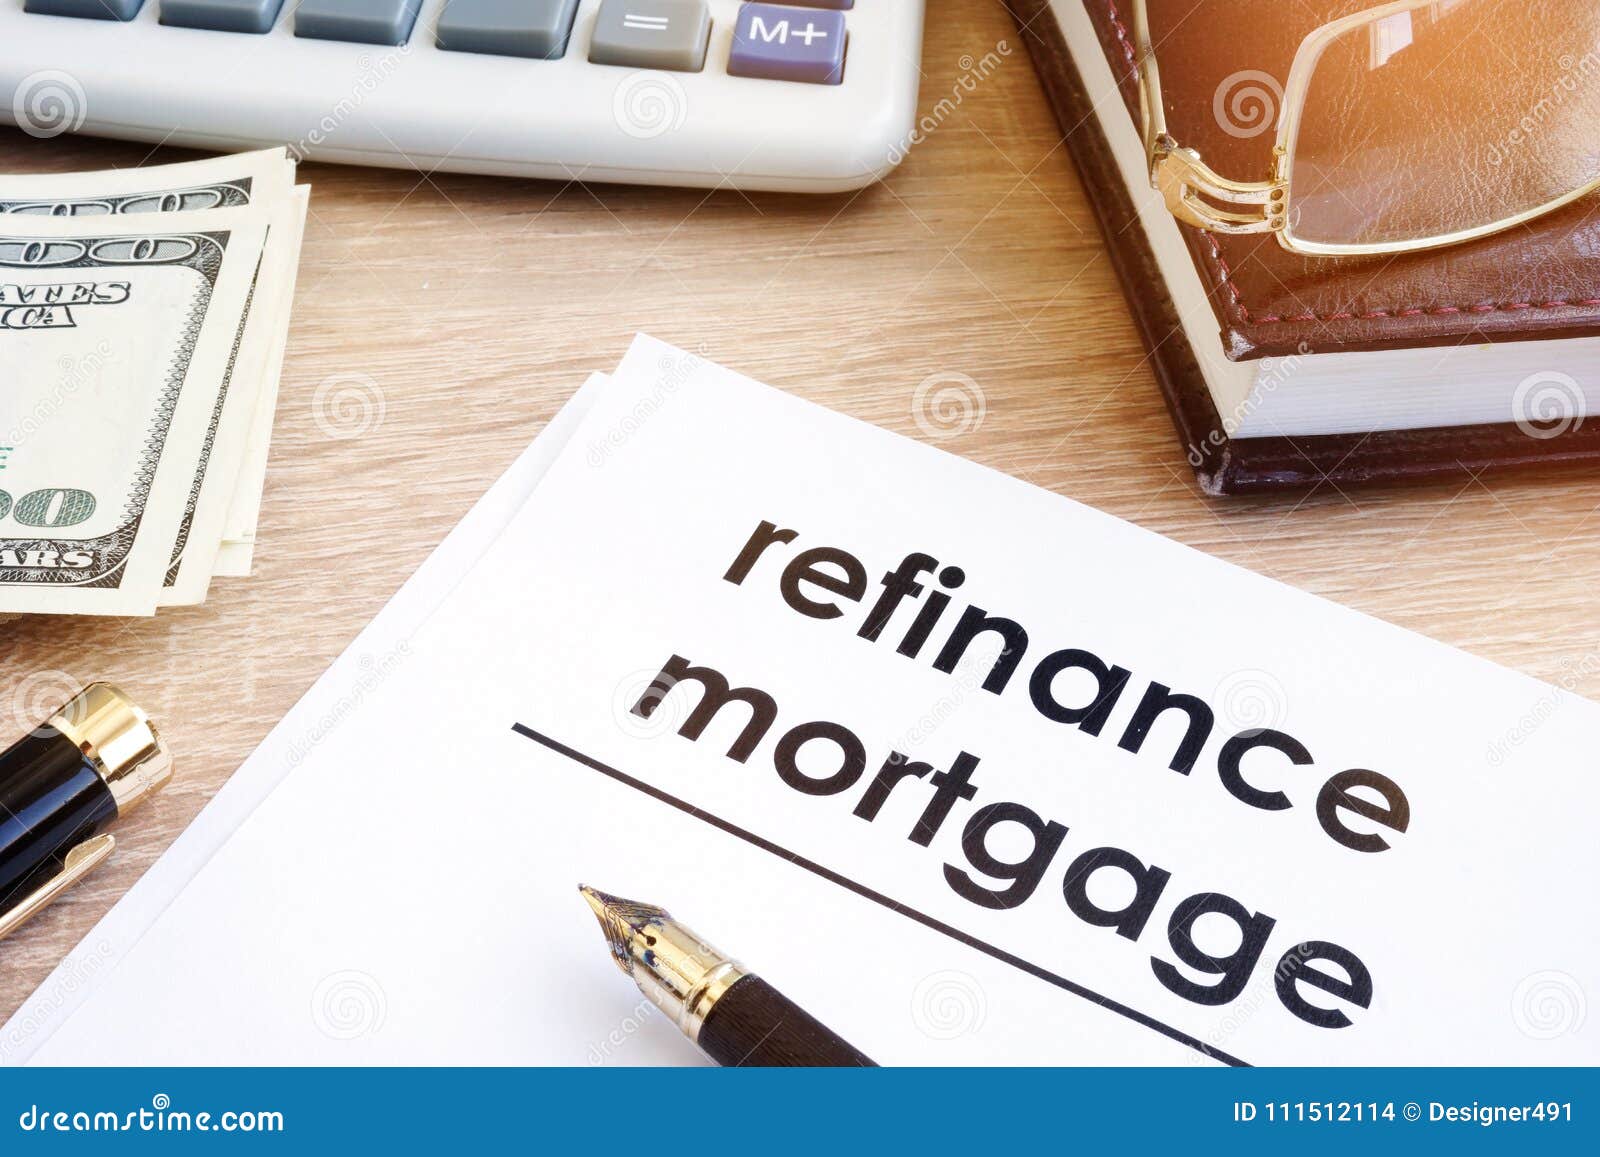 refinance mortgage application